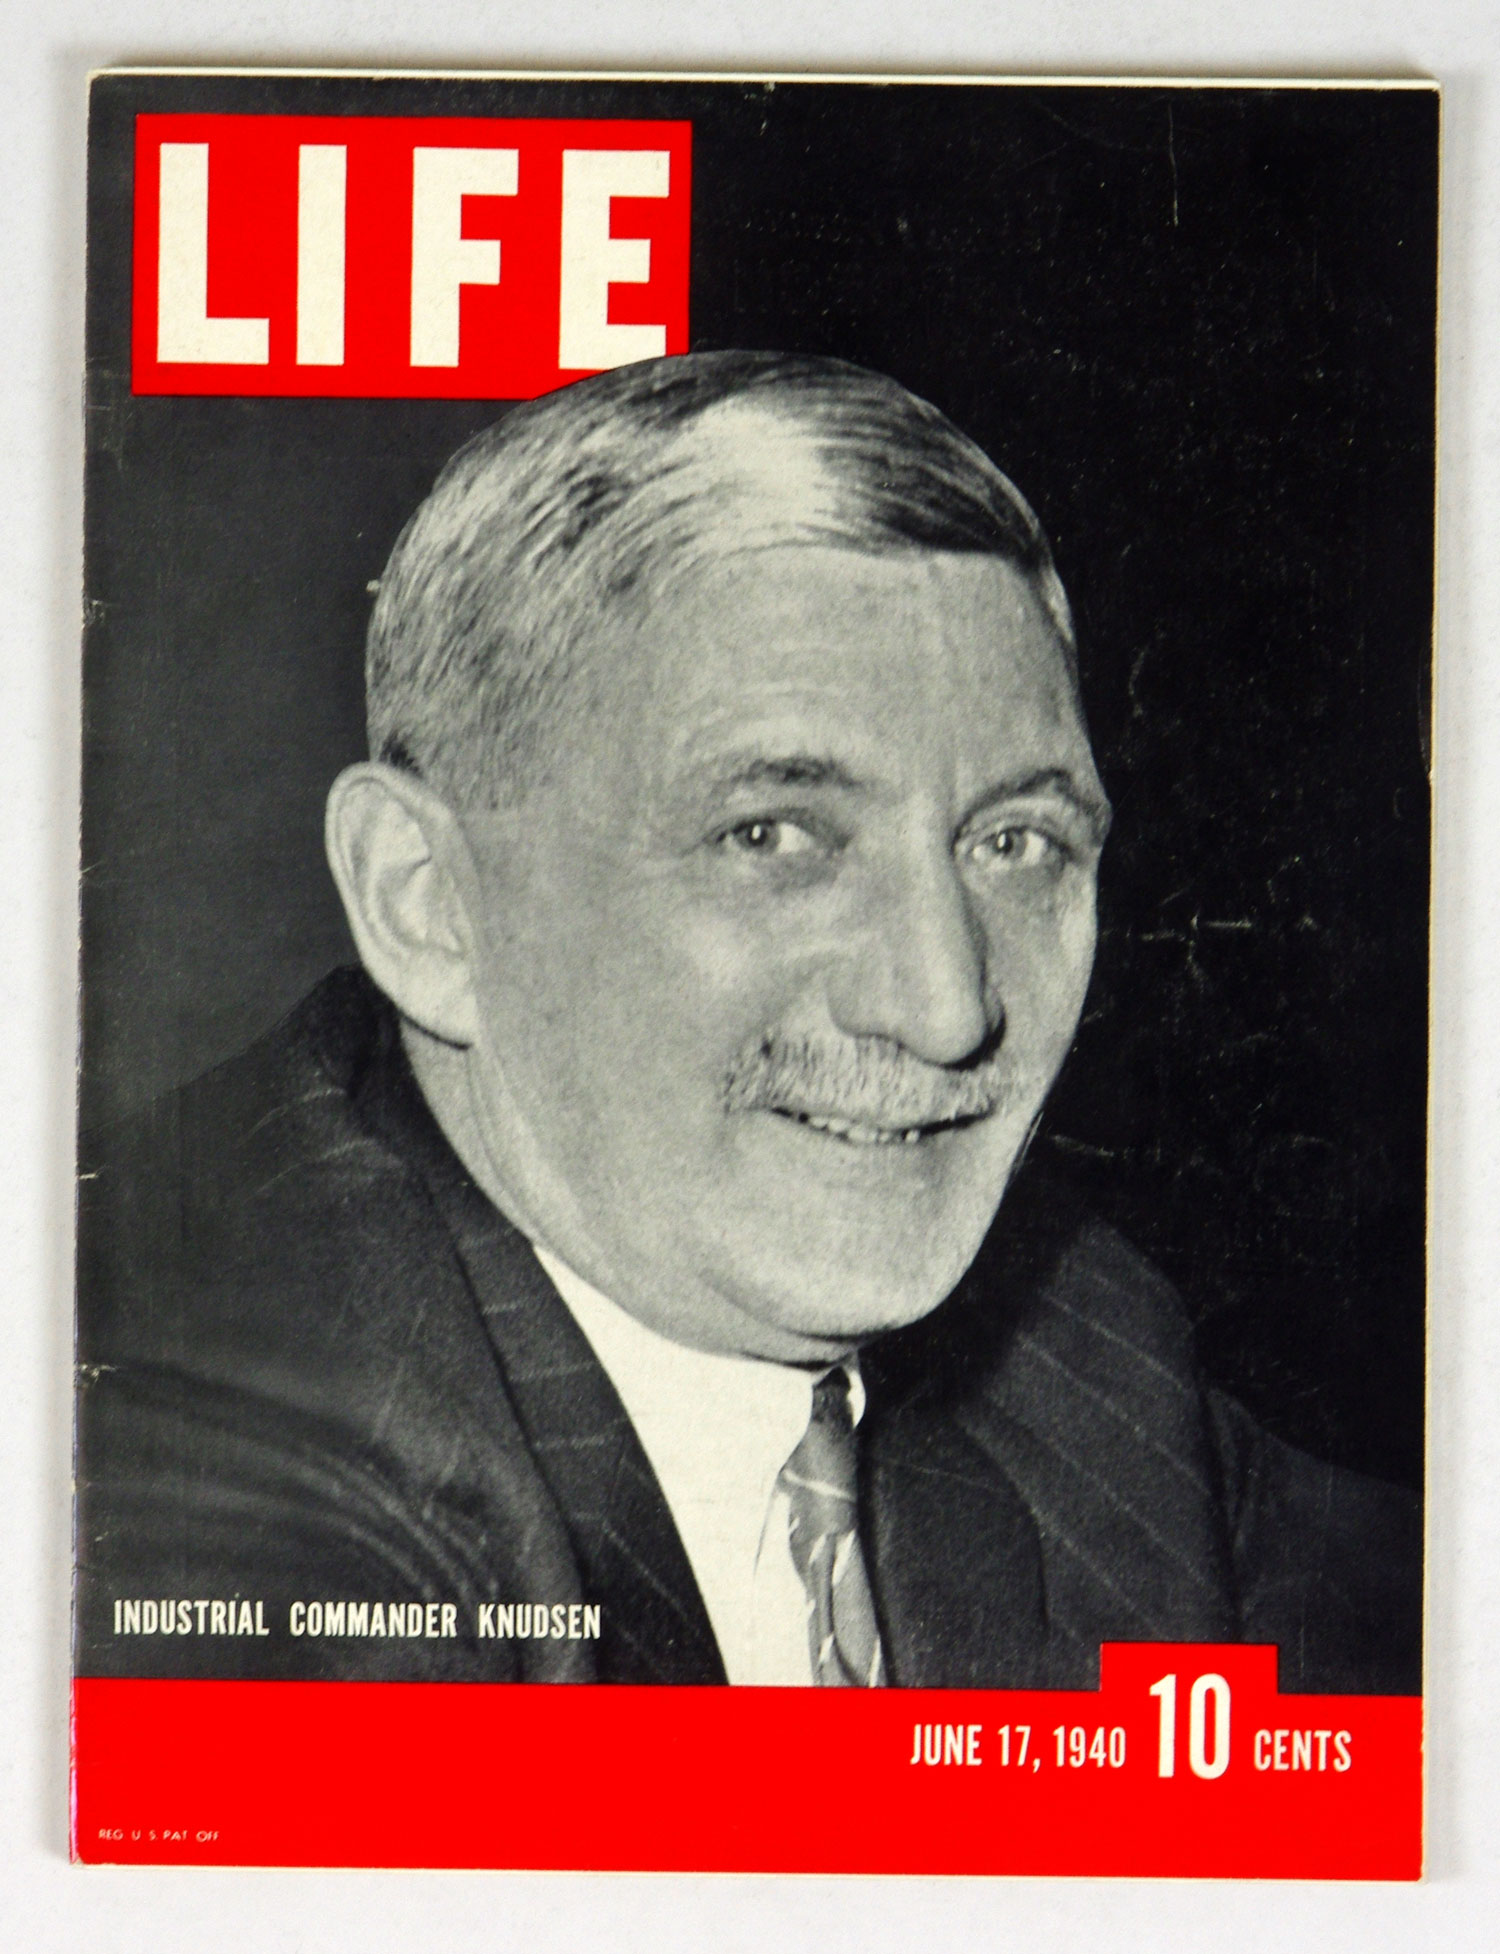 LIFE Magazine Back Issue 1940 June 17 Industrial Commander Knudsen